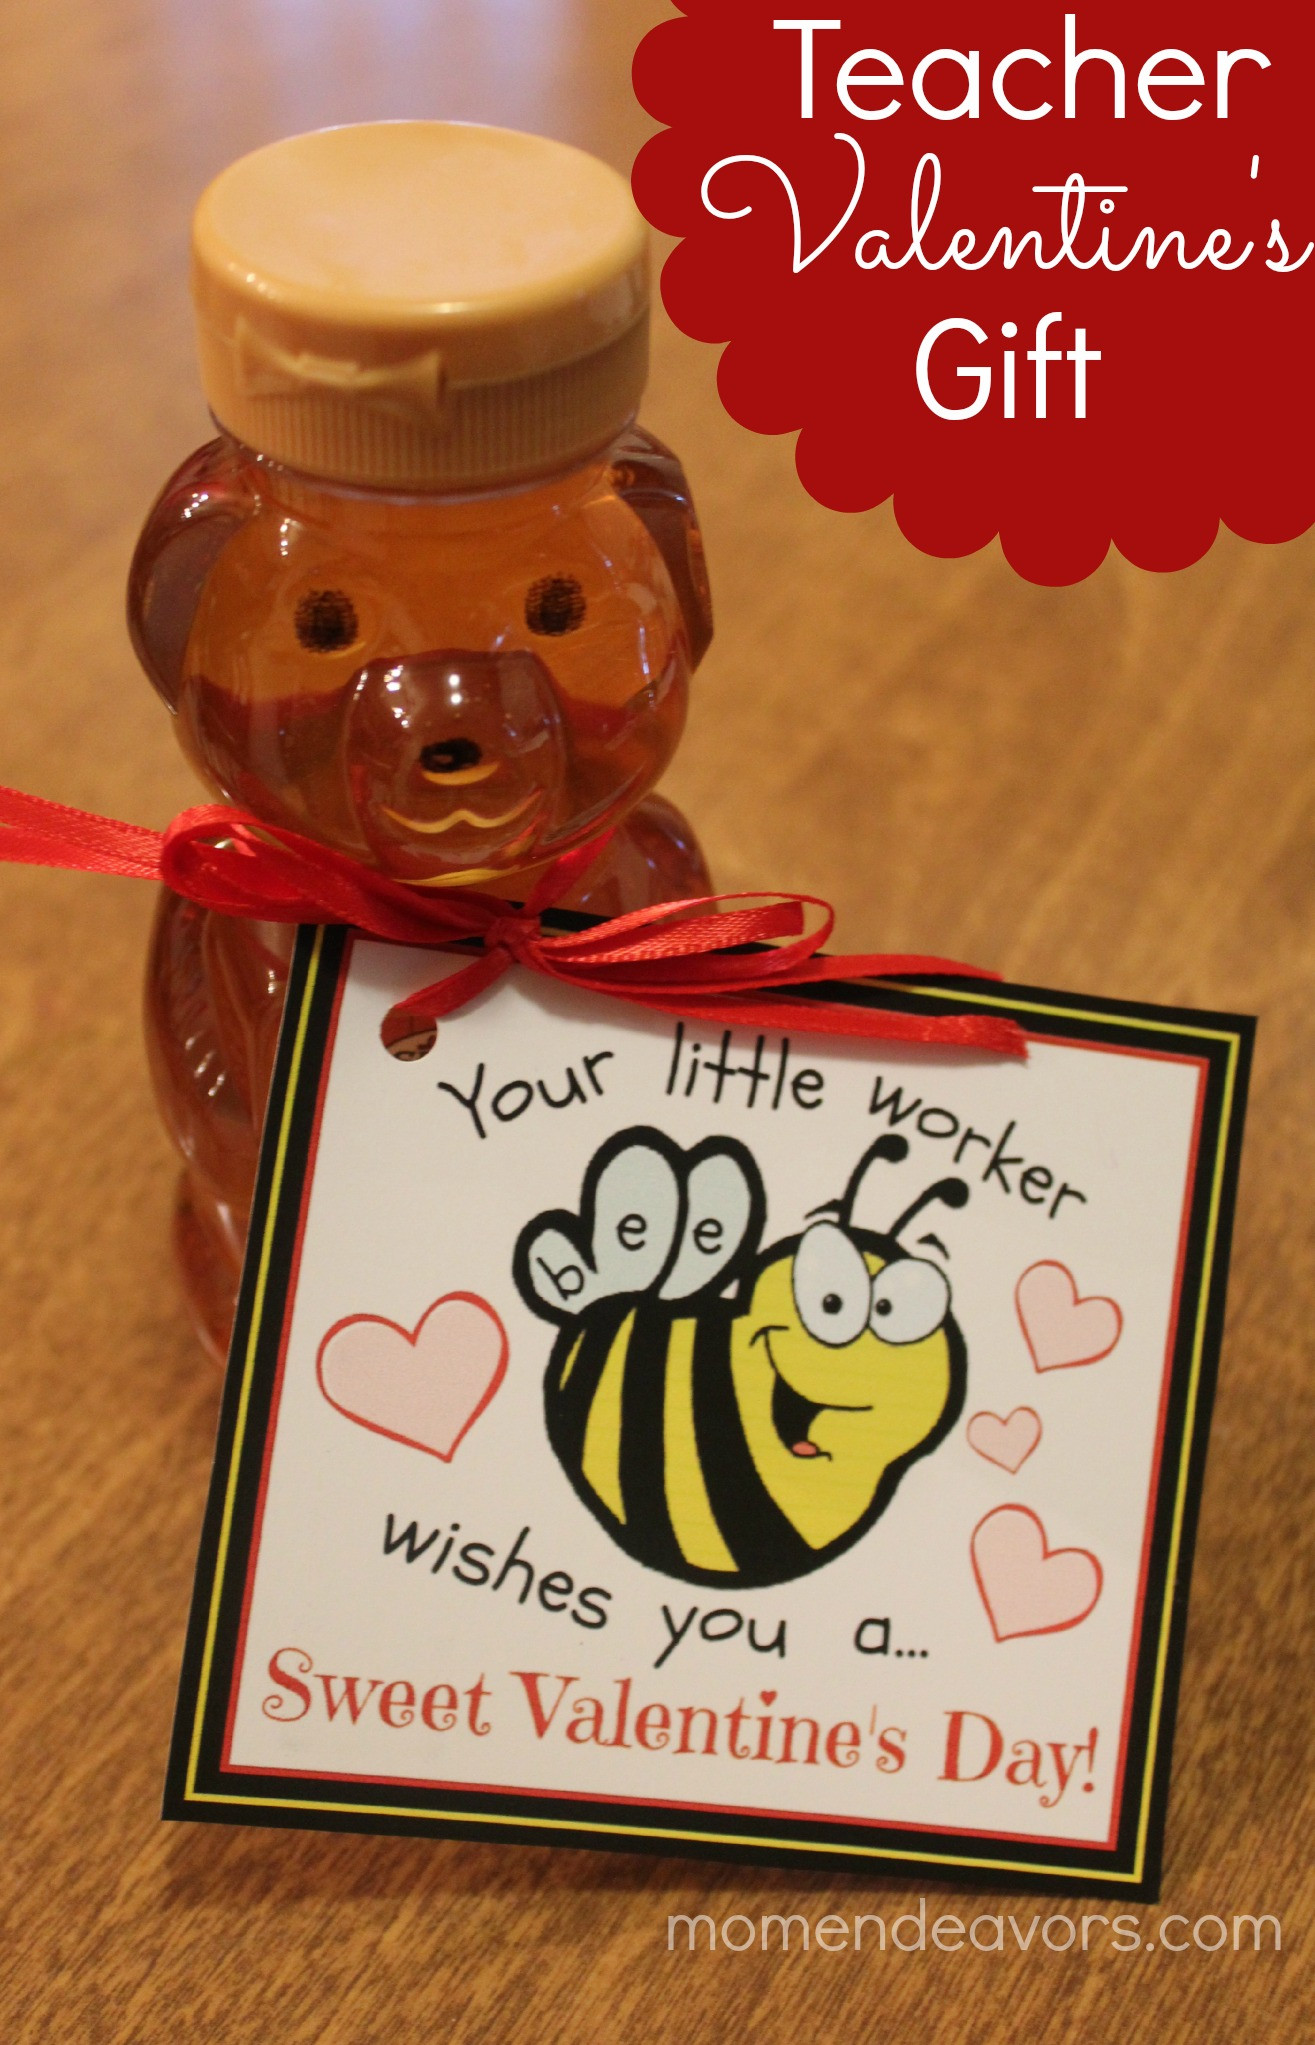 Valentine Teacher Gift Ideas
 Bee themed Teacher Valentine’s Gift